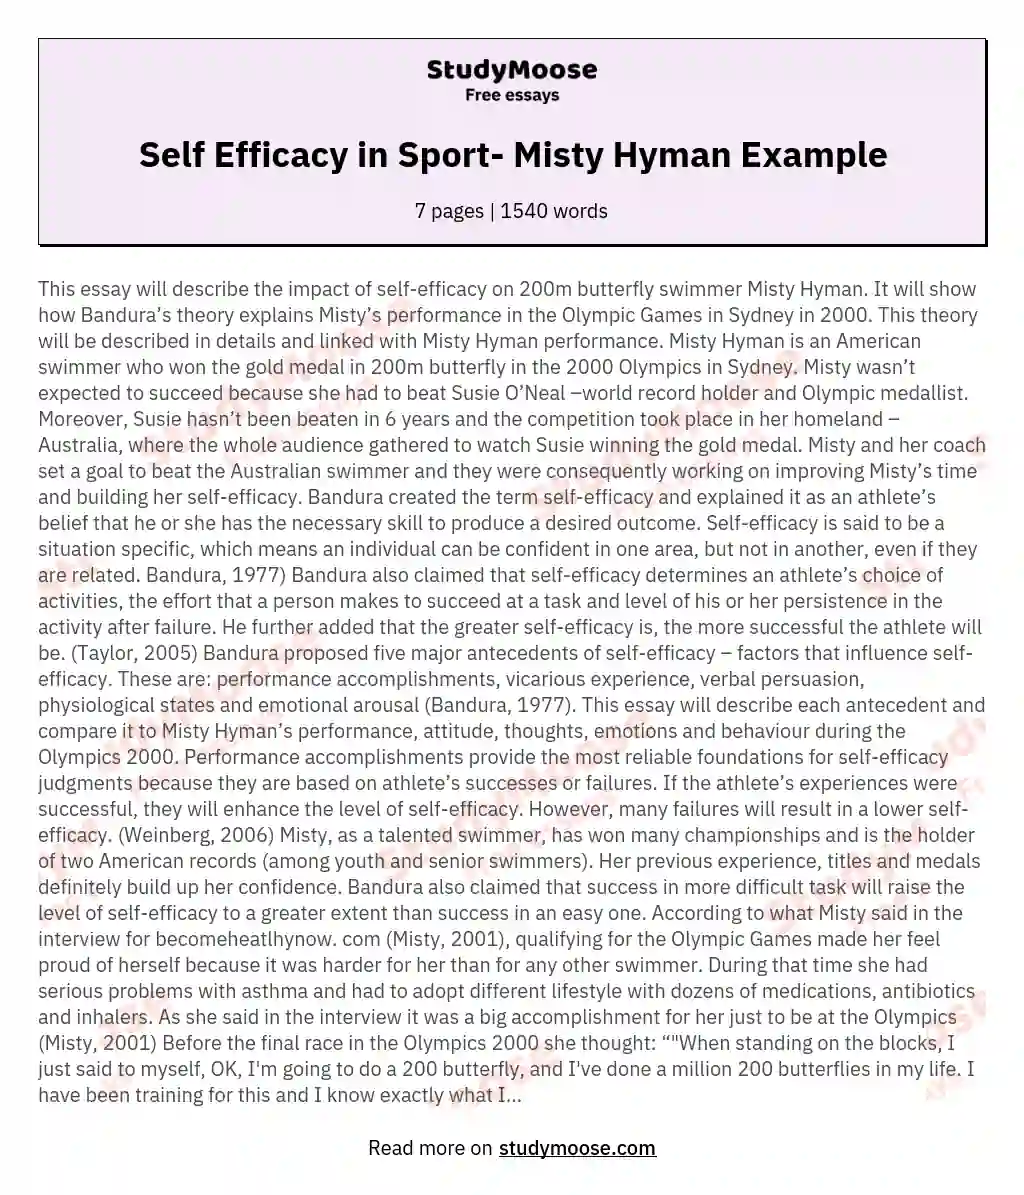 Self Efficacy in Sport- Misty Hyman Example essay